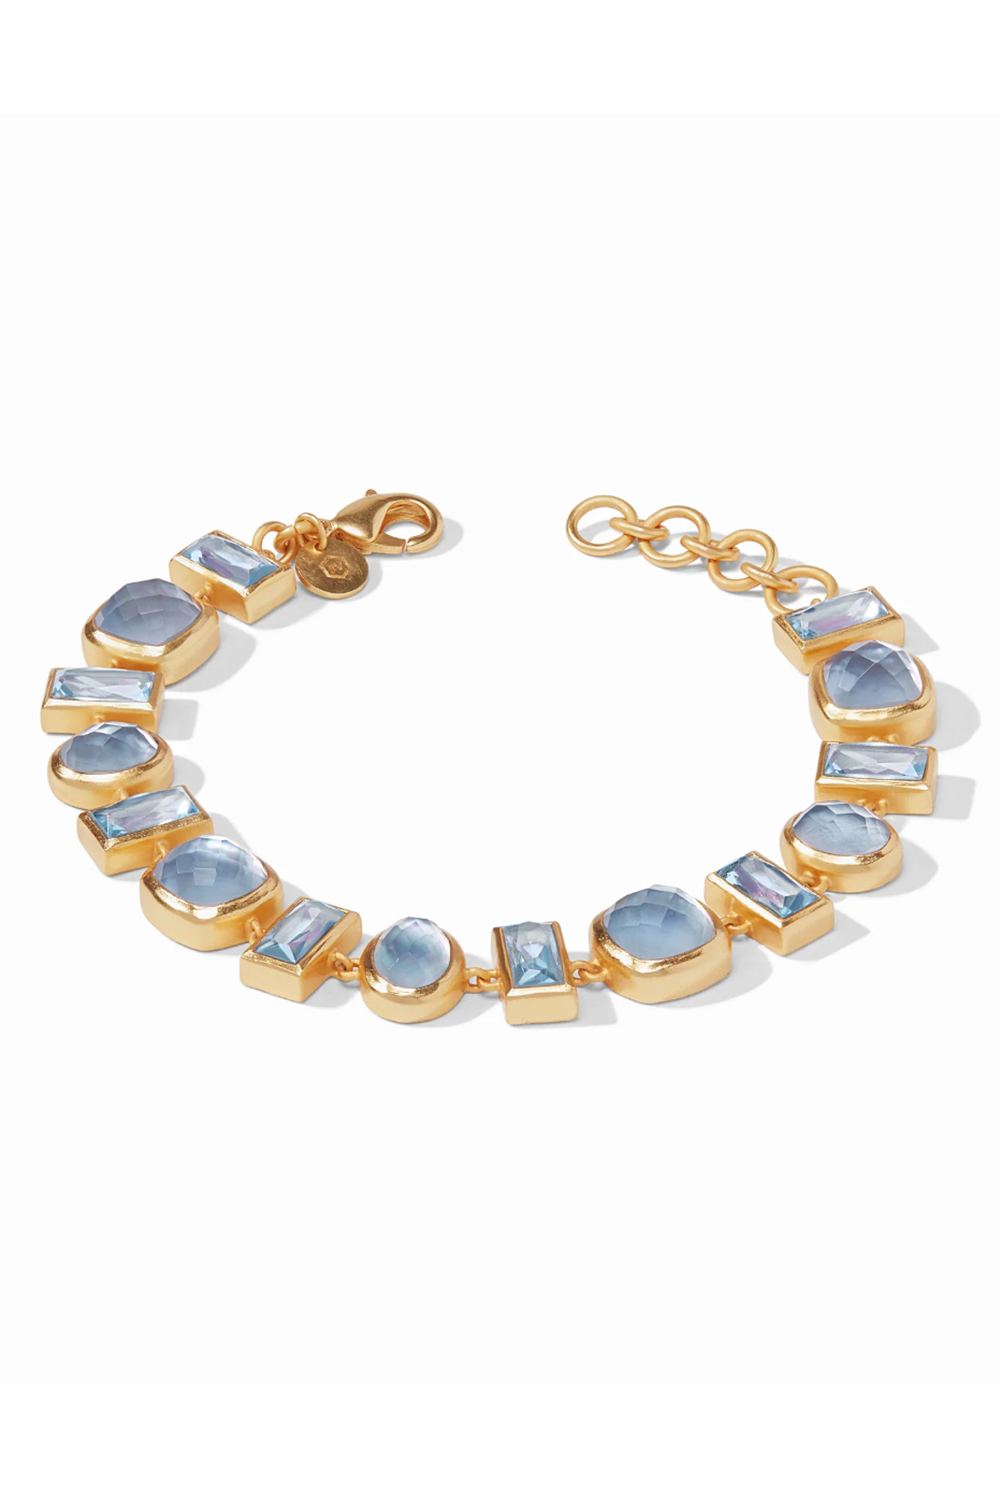 Julie Vos Antonia Tennis Bracelet - Iridescent Chalcedony Blue